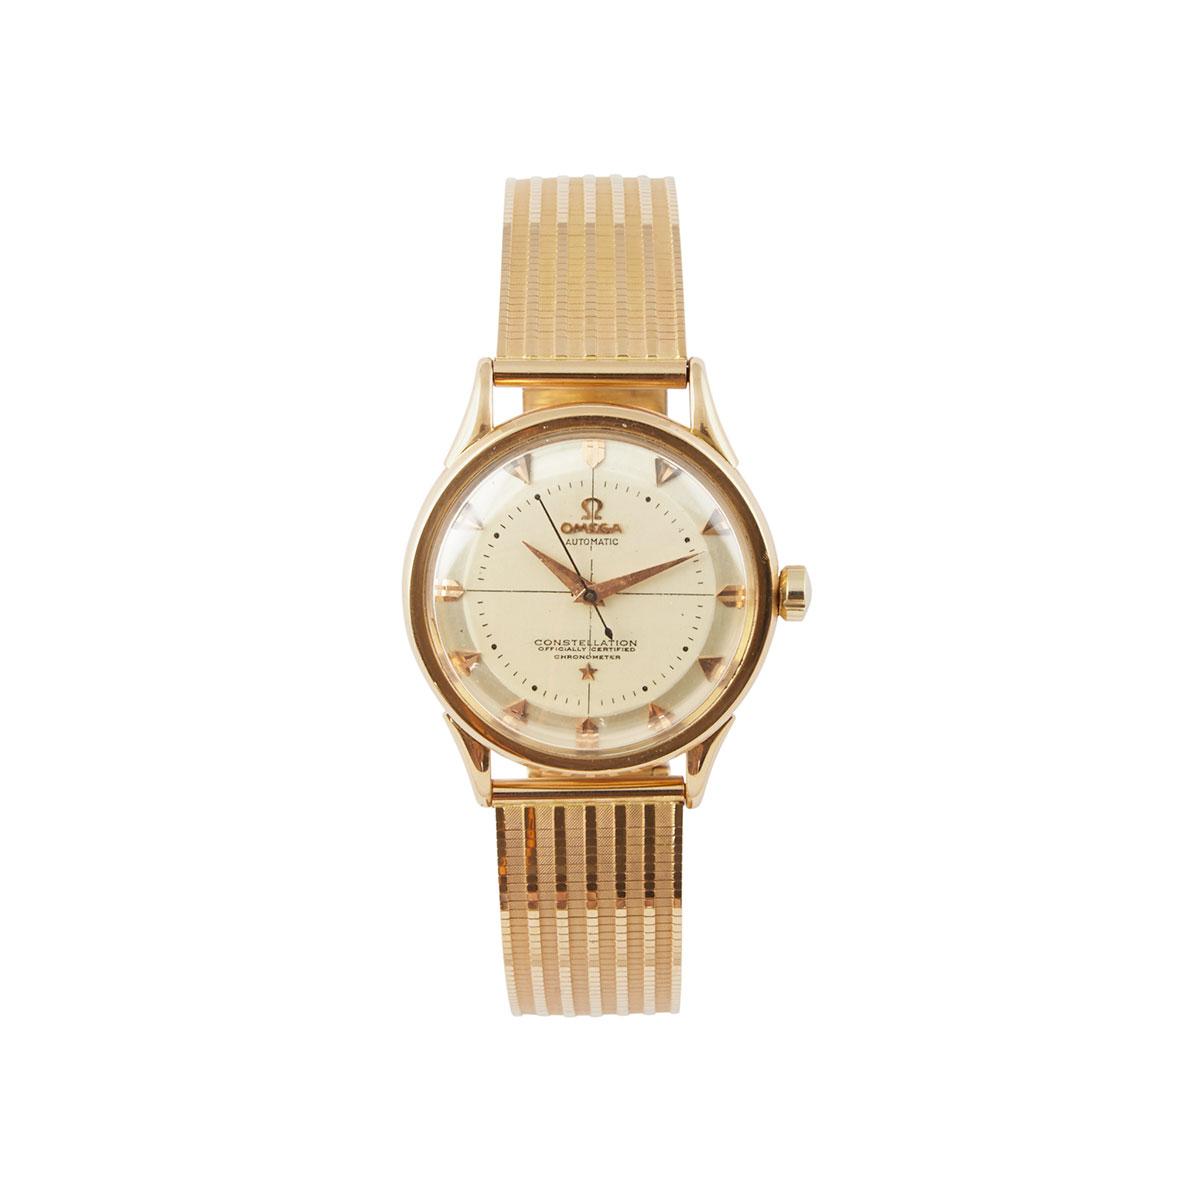 Omega Constellation Automatic Chronometer Wristwatch